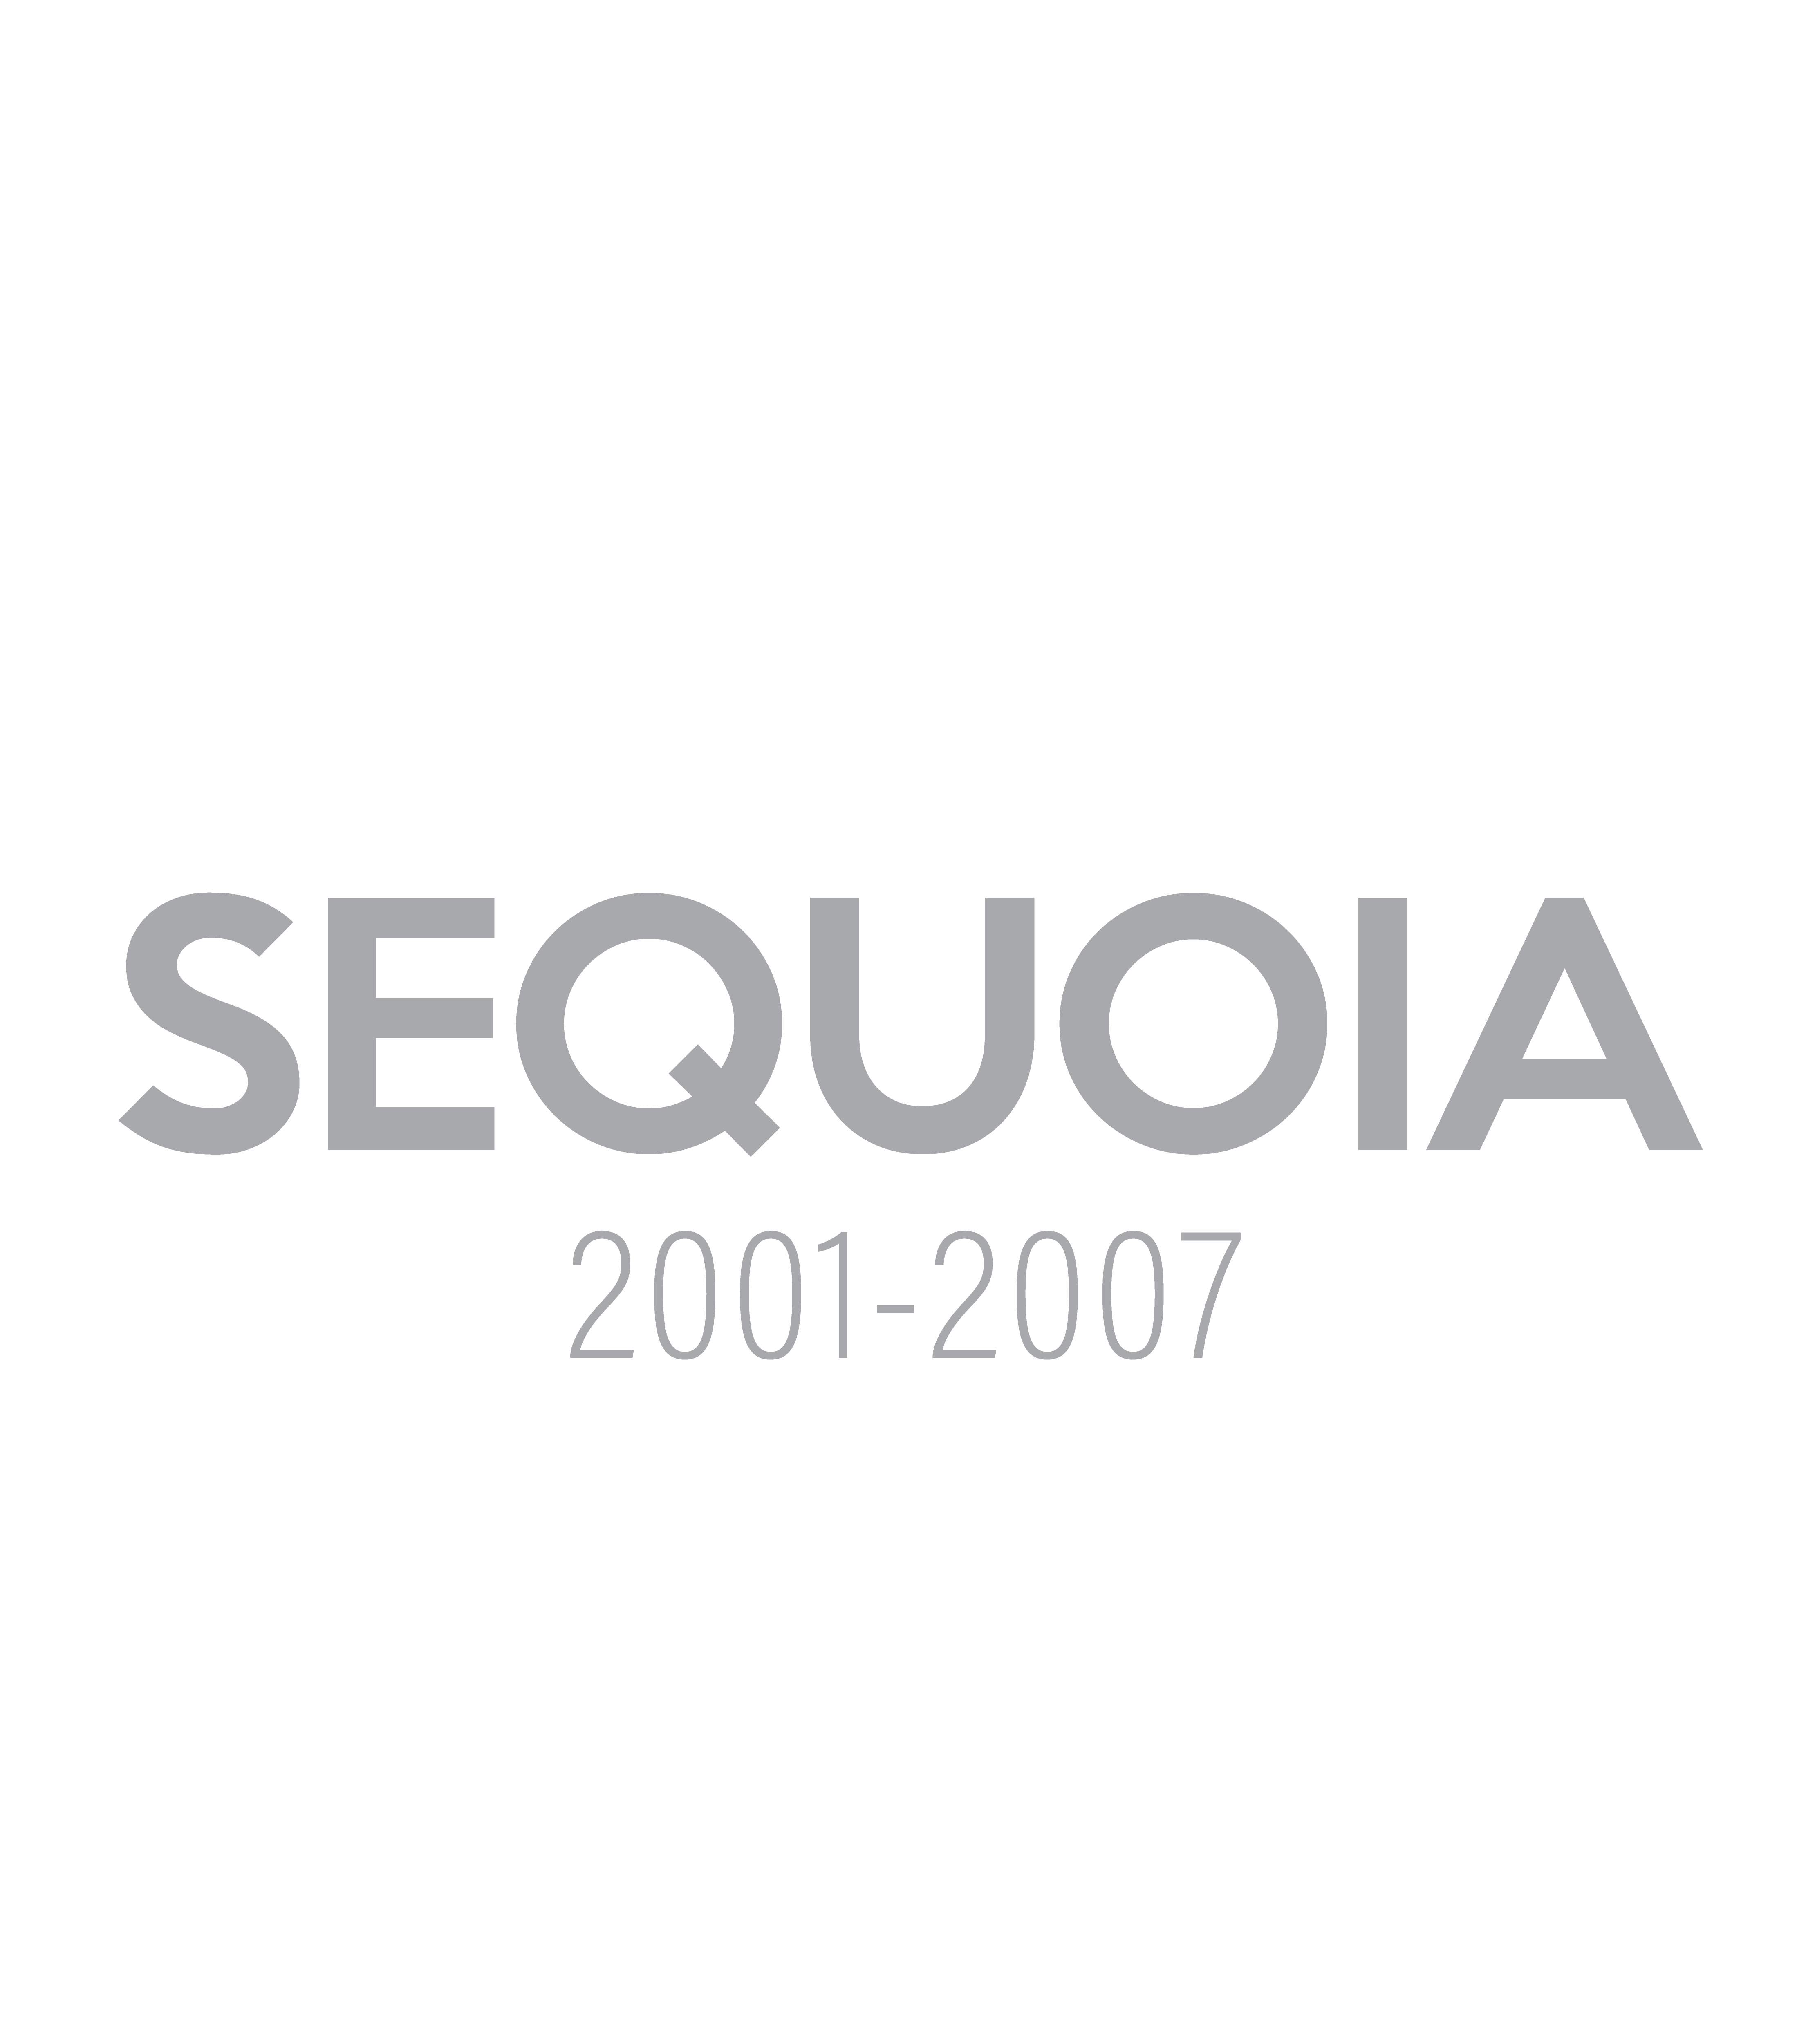 toyota sequoia 2001-2007 gobi gallery image